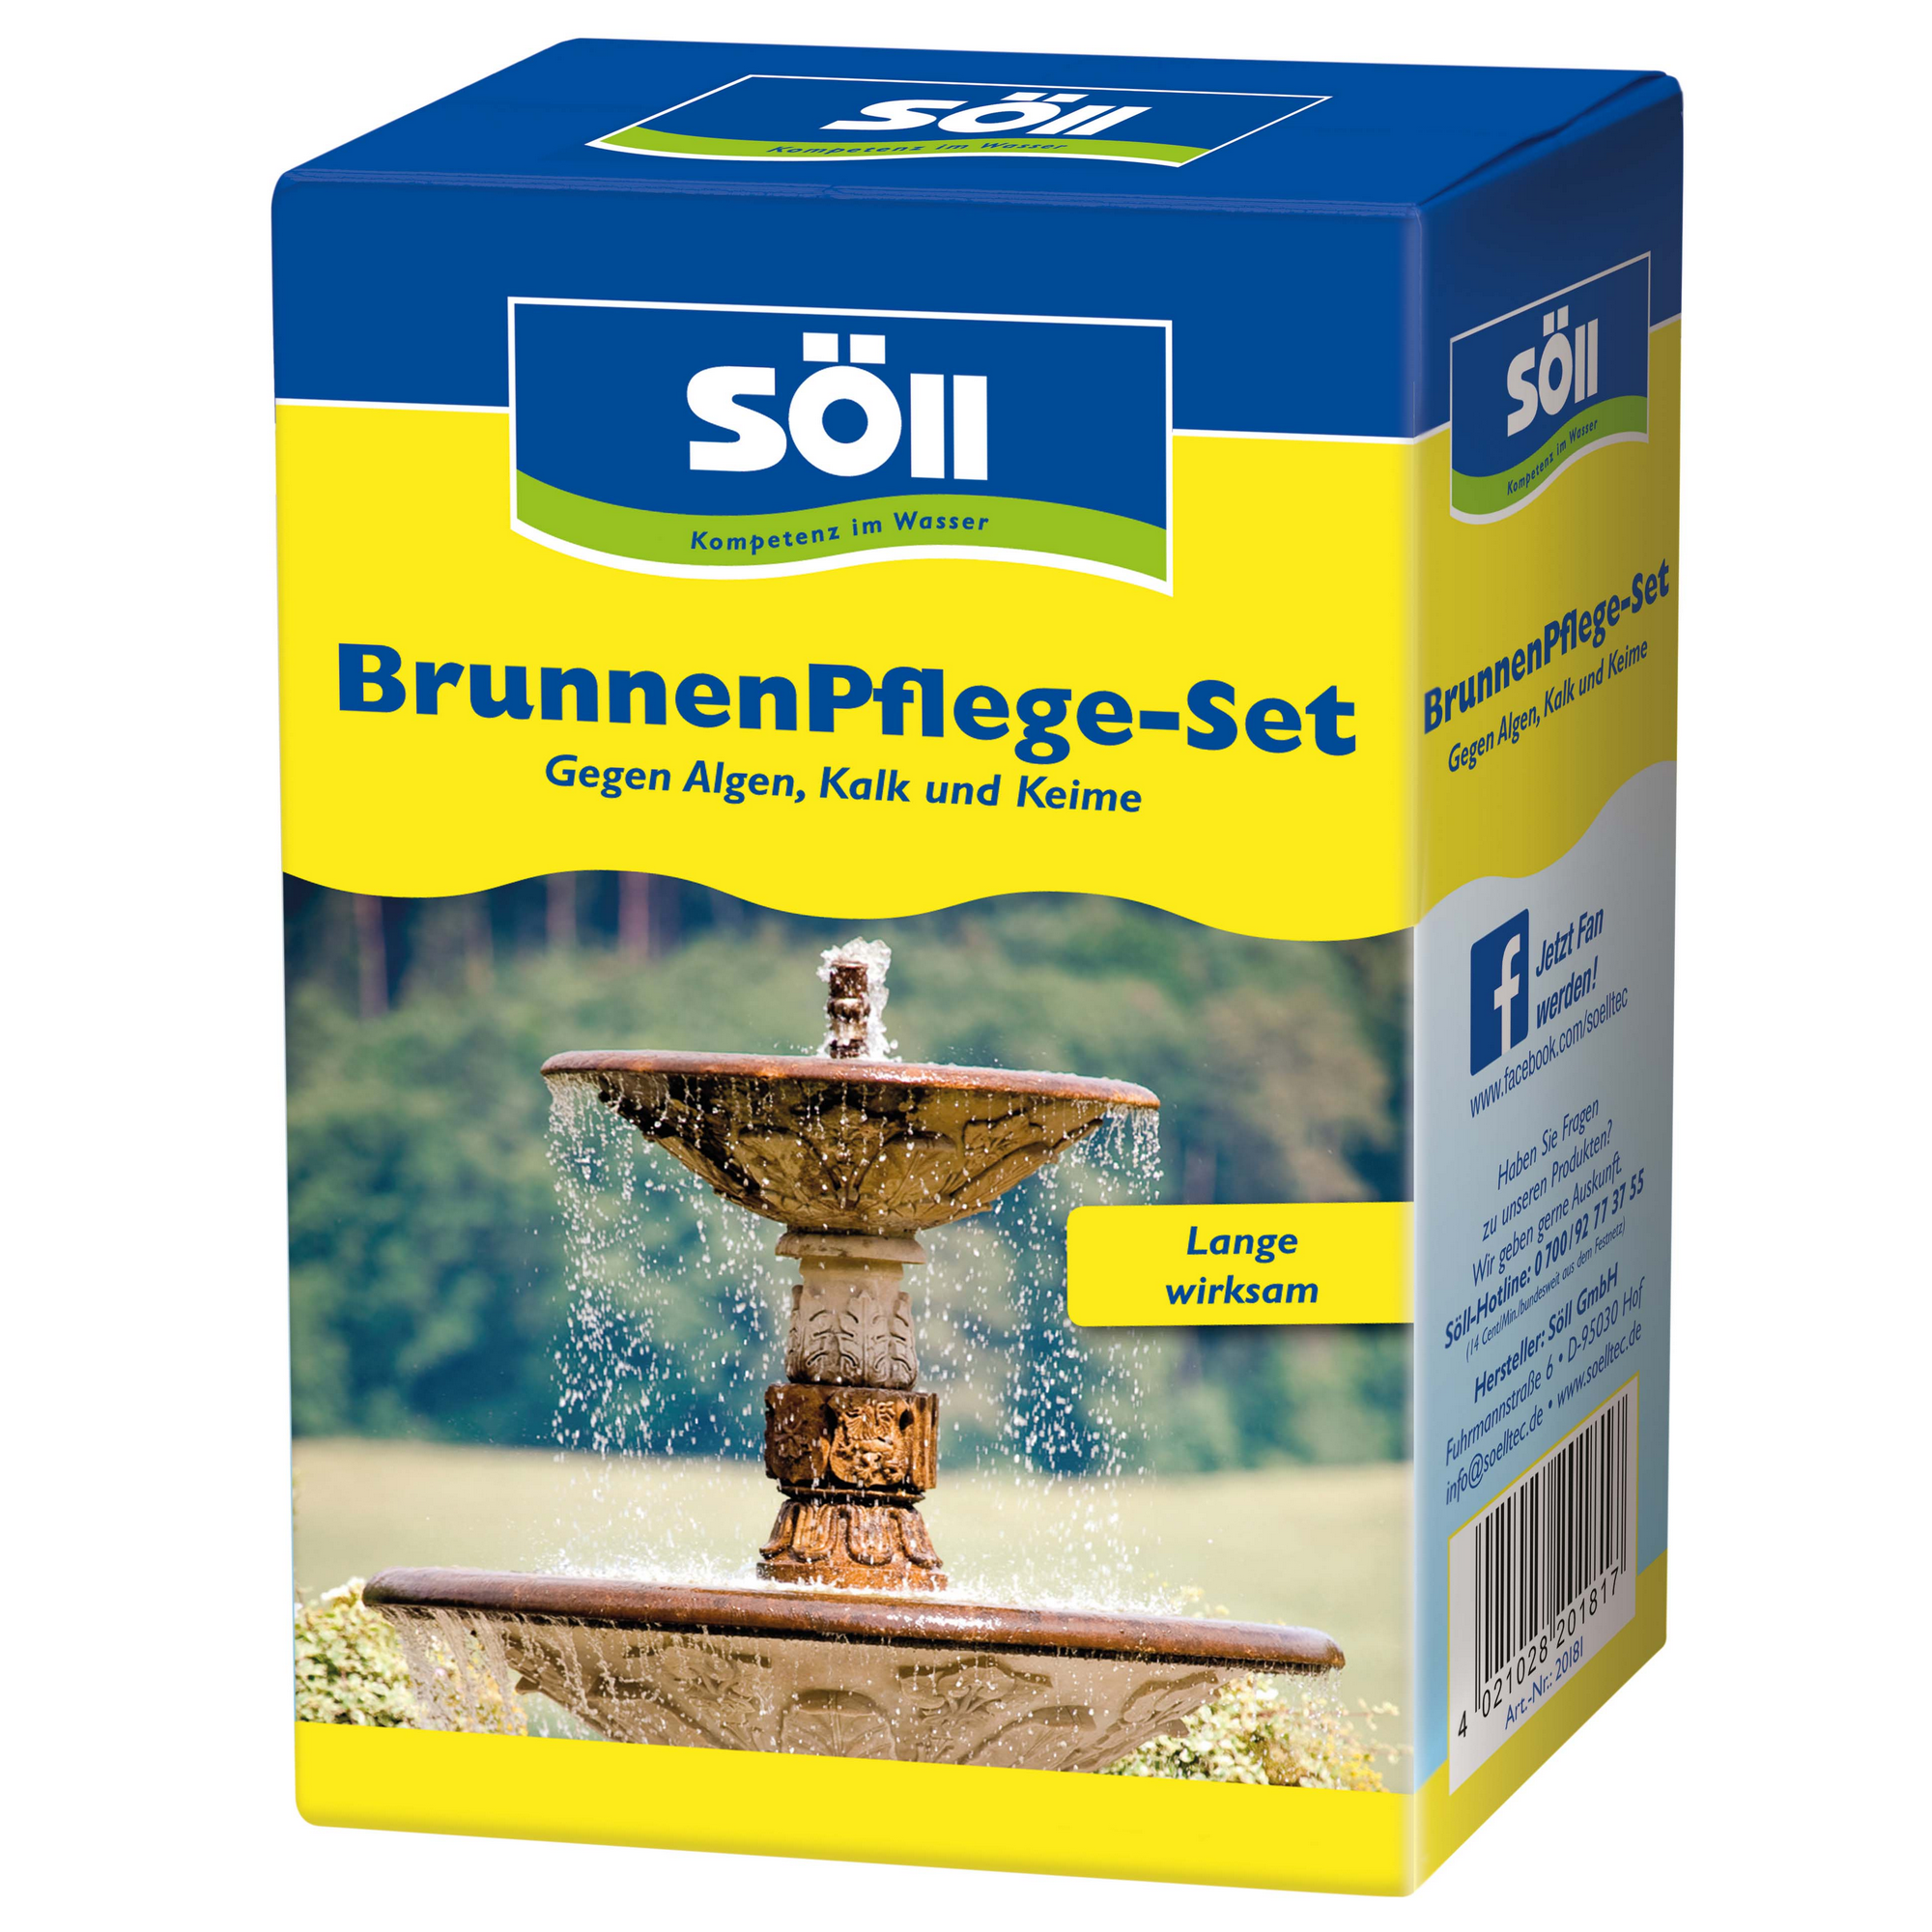 Brunnen-Pflege-Set 2-teilig + product picture